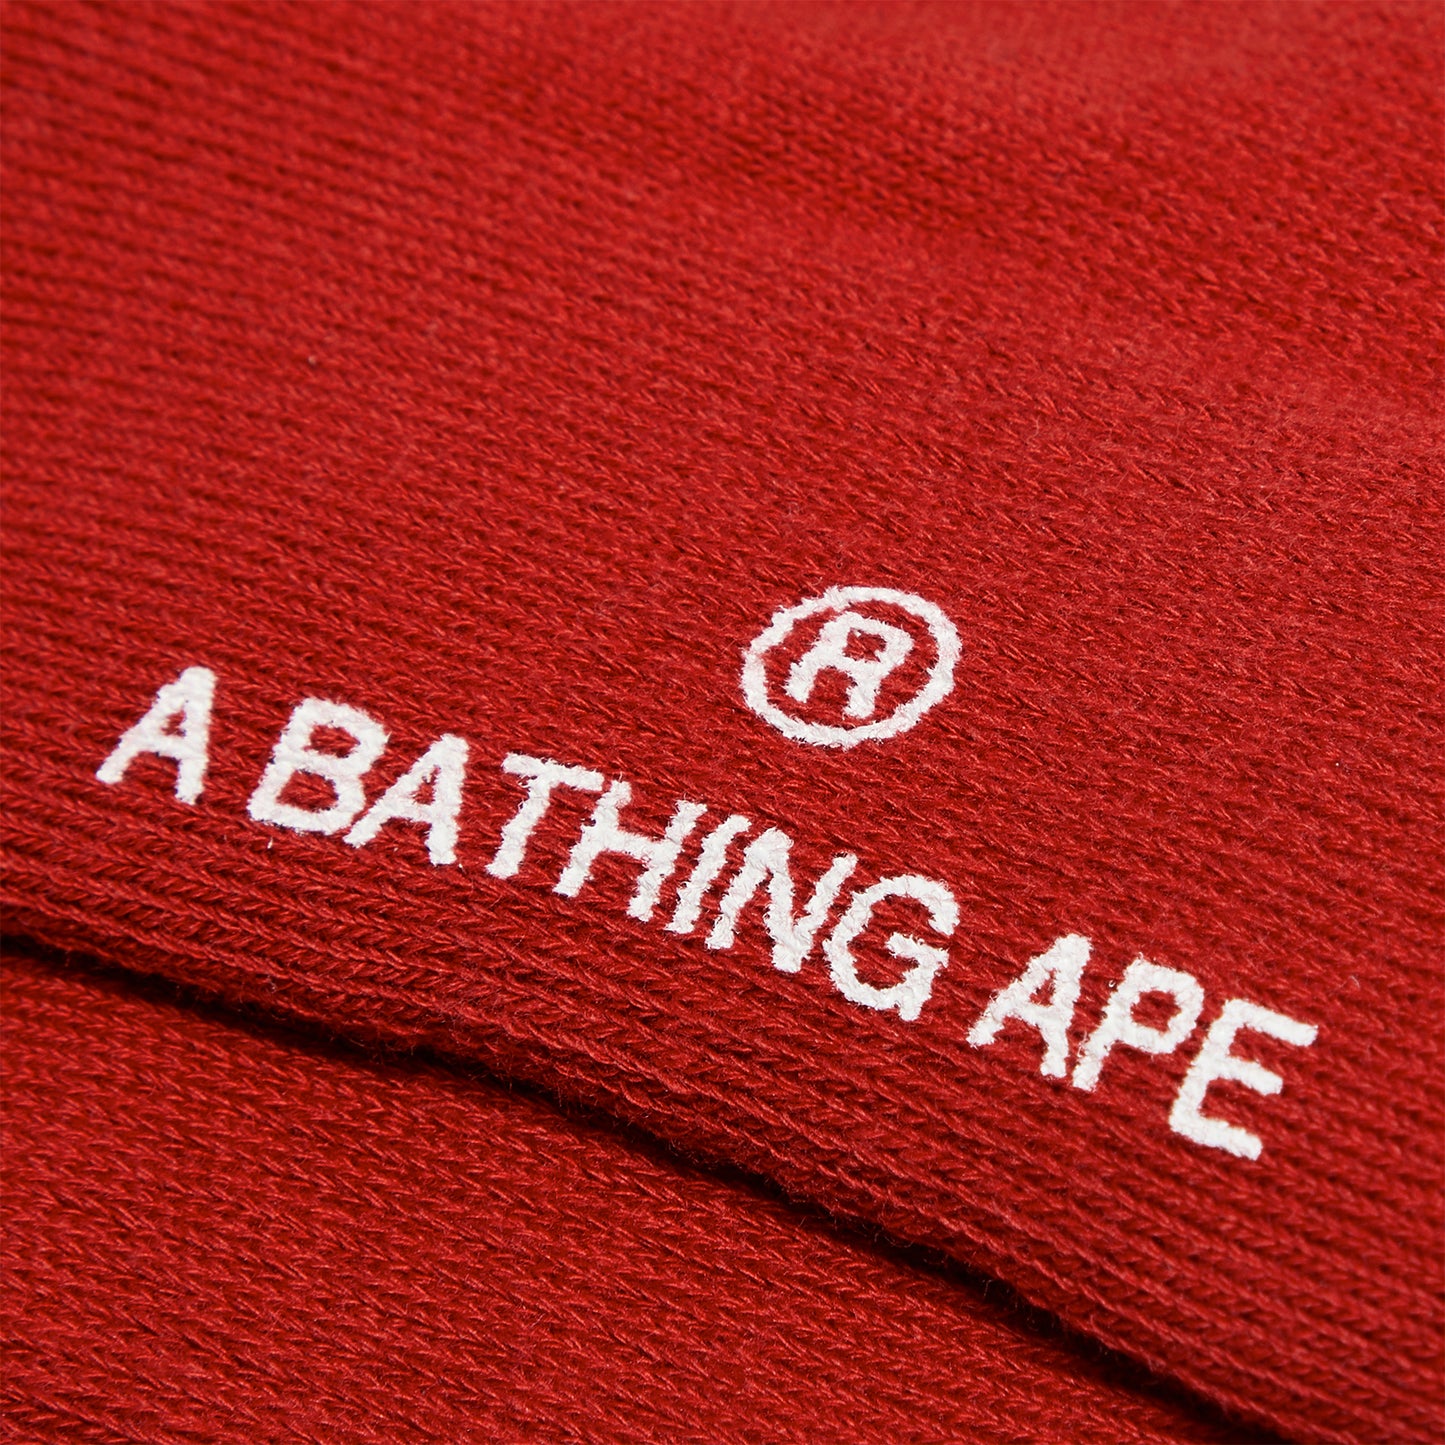 A Bathing Ape Bape Socks (Red)